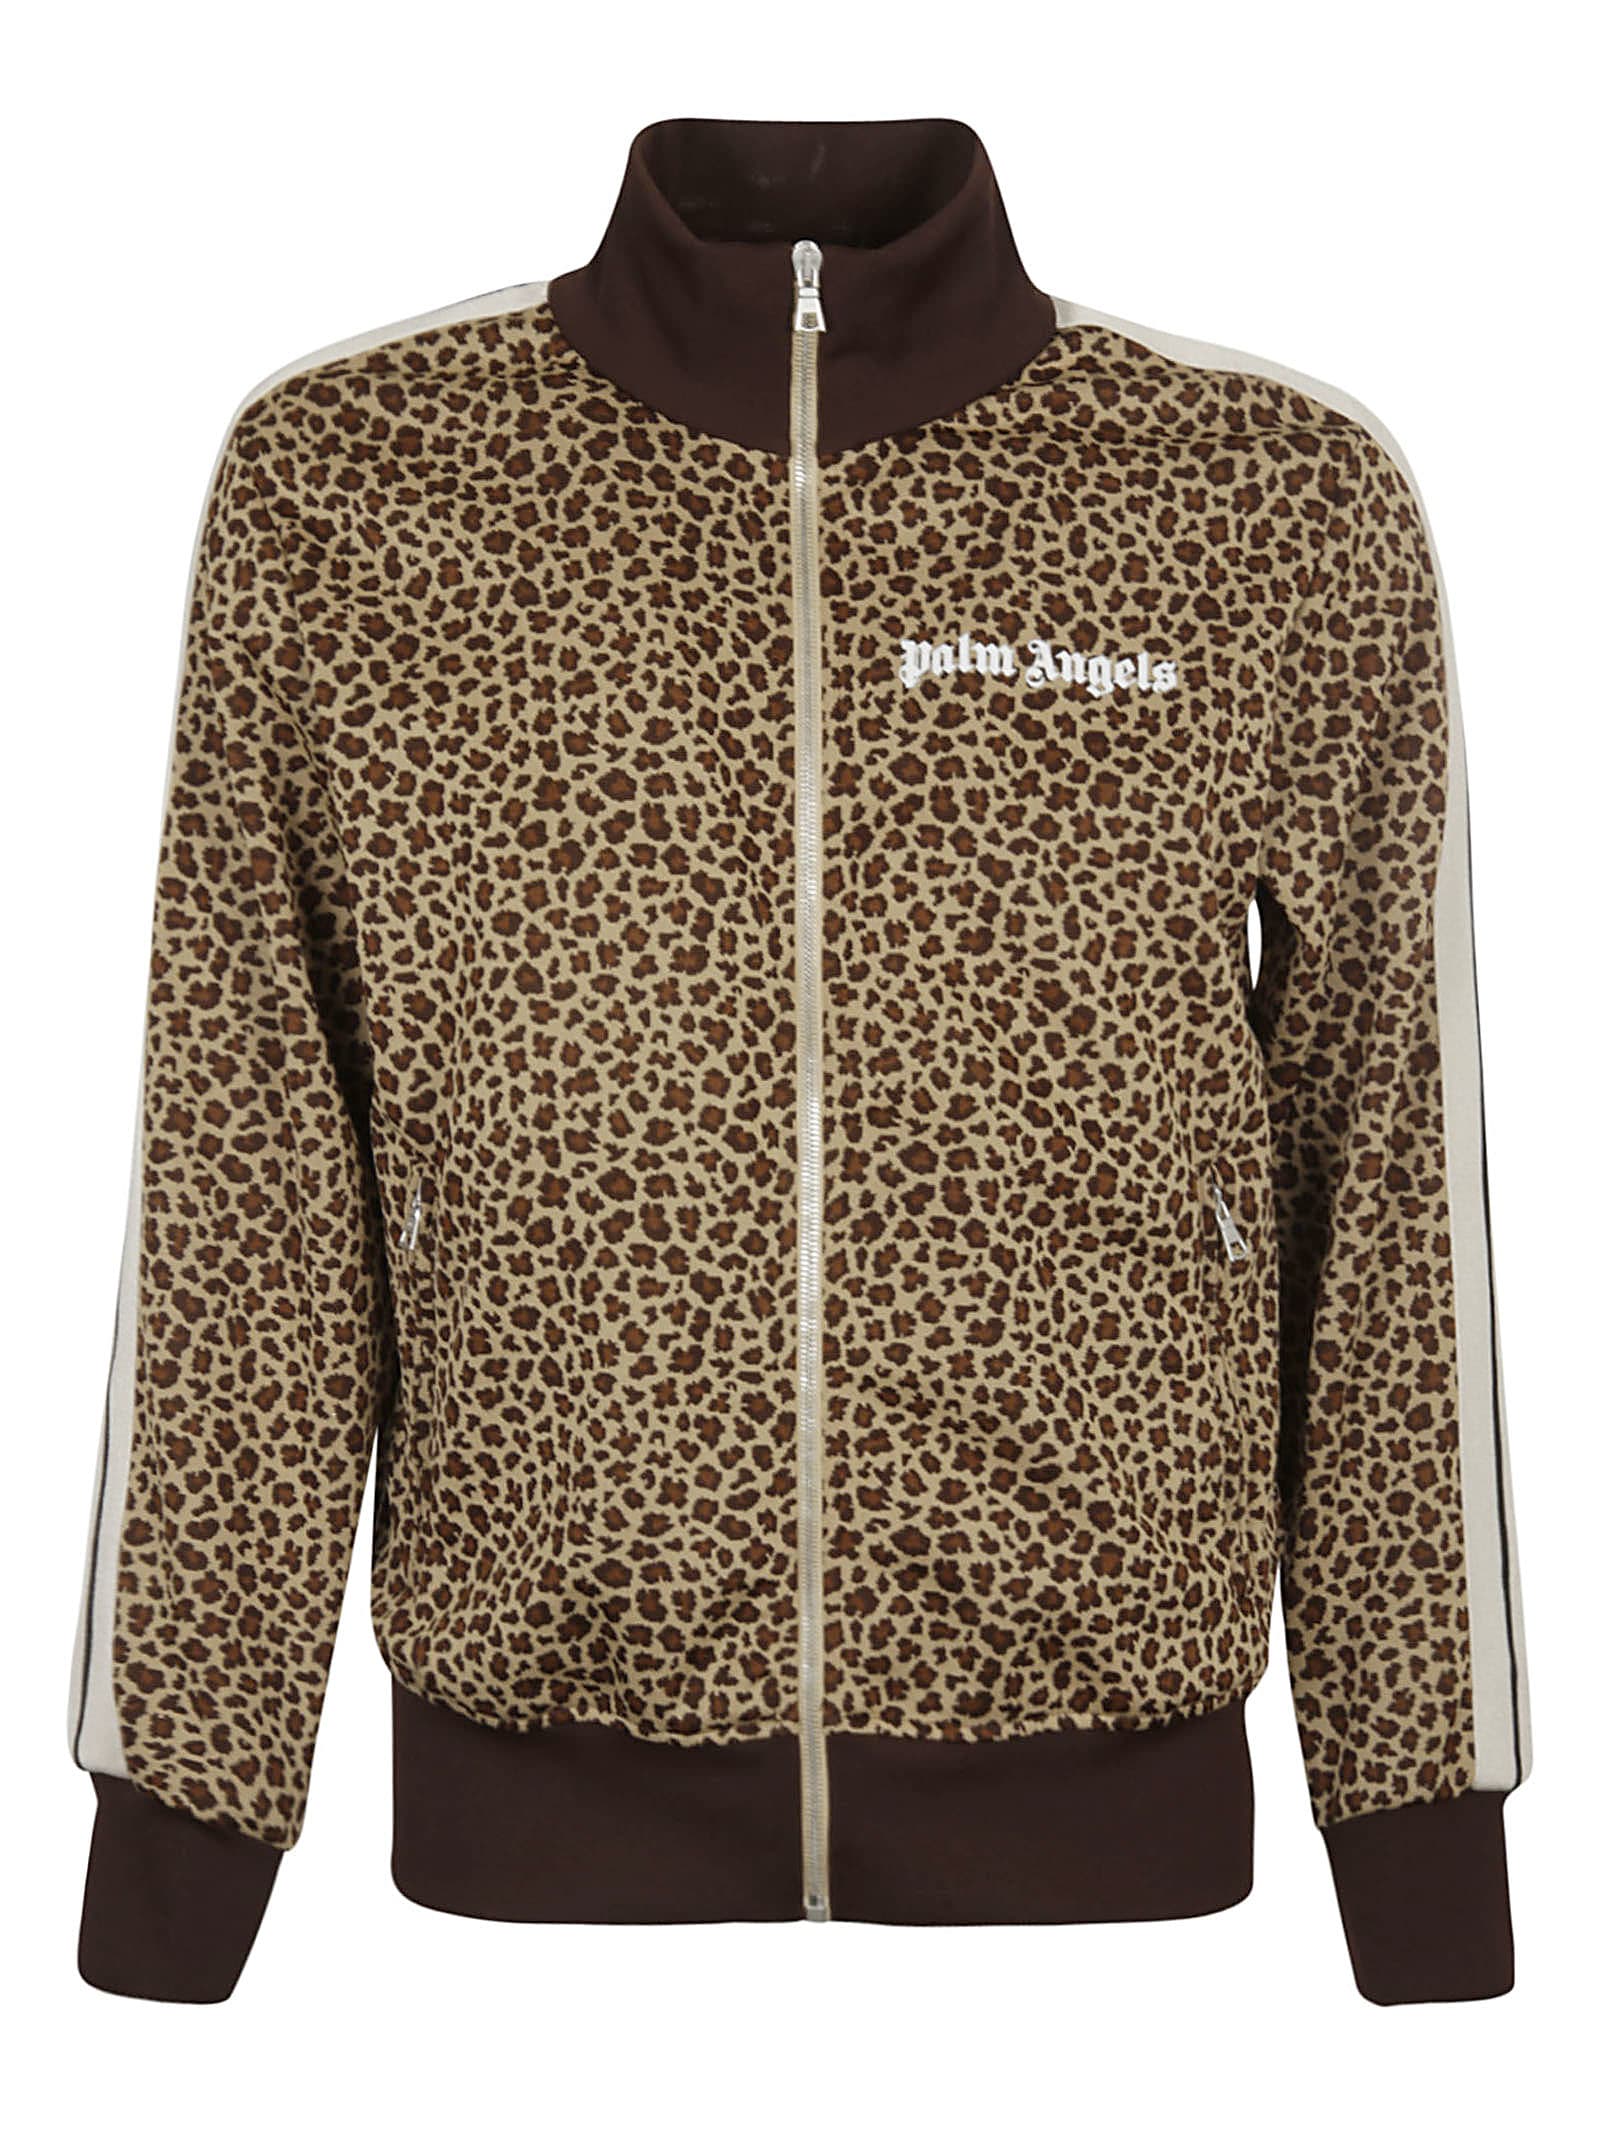 Palm Angels Leopard Jacquard Track Jacket